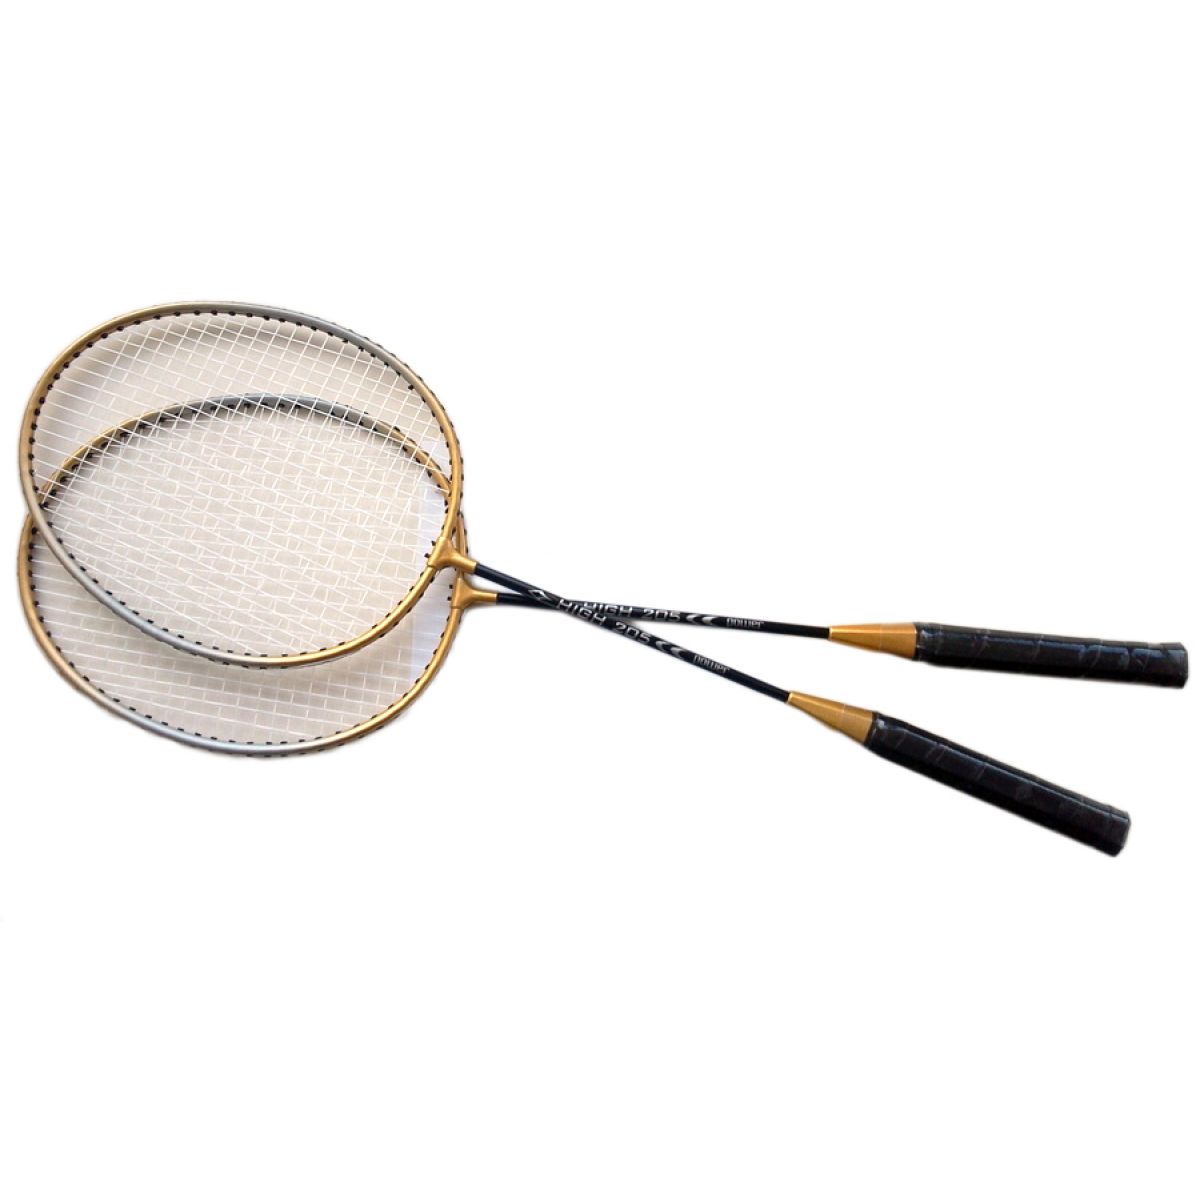 Unison Badmintonová souprava 2ks